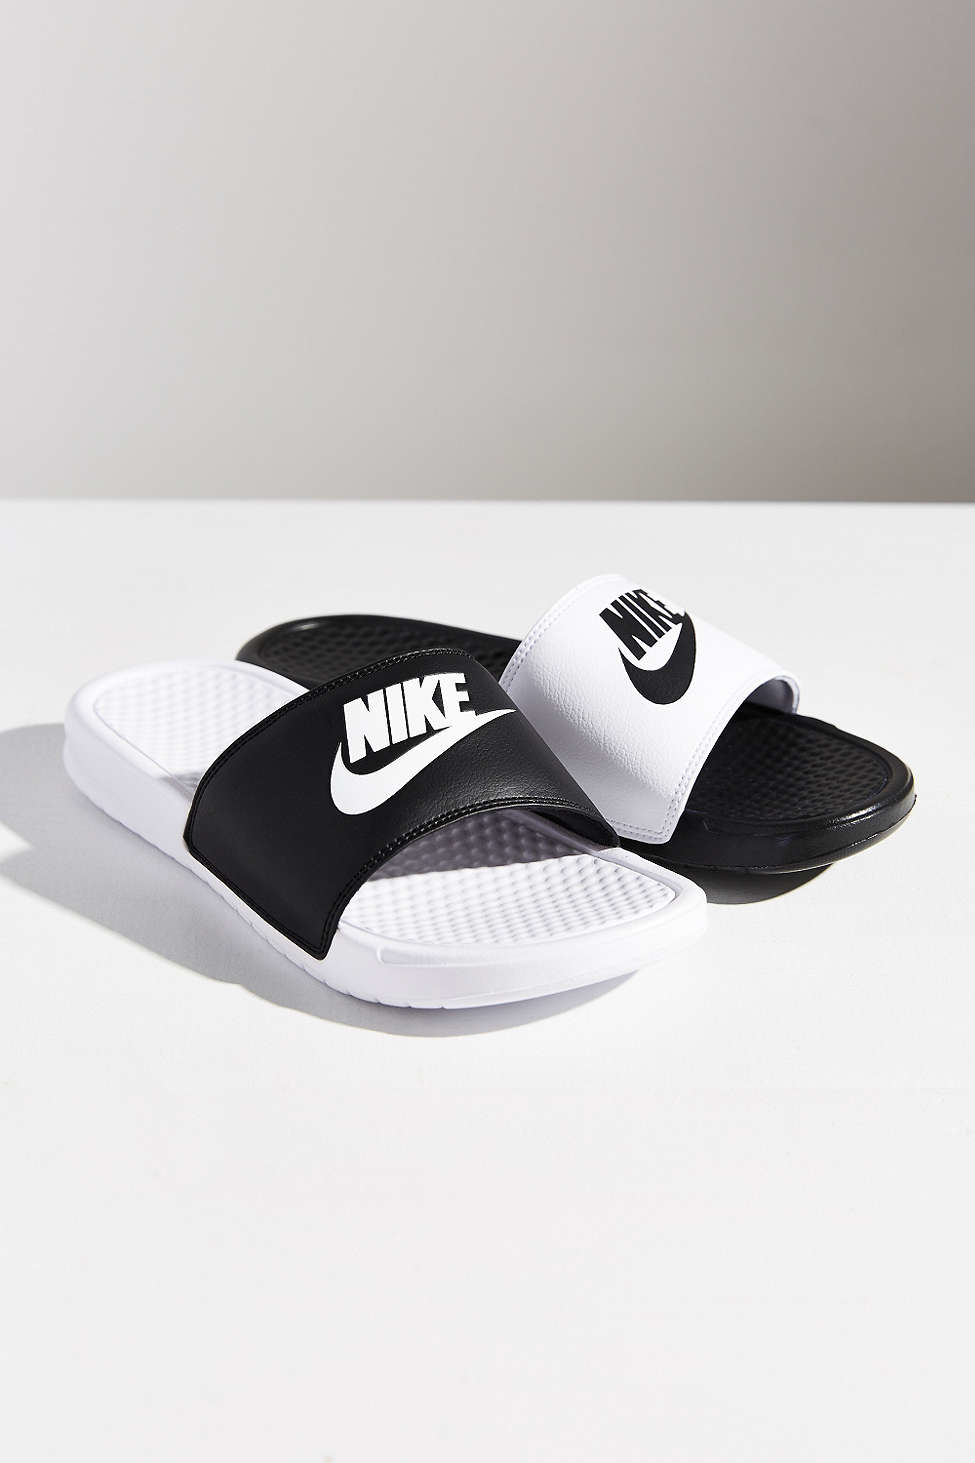 Nike Synthetic Benassi Jdi Mismatch Slide in Black & White (Black) - Lyst